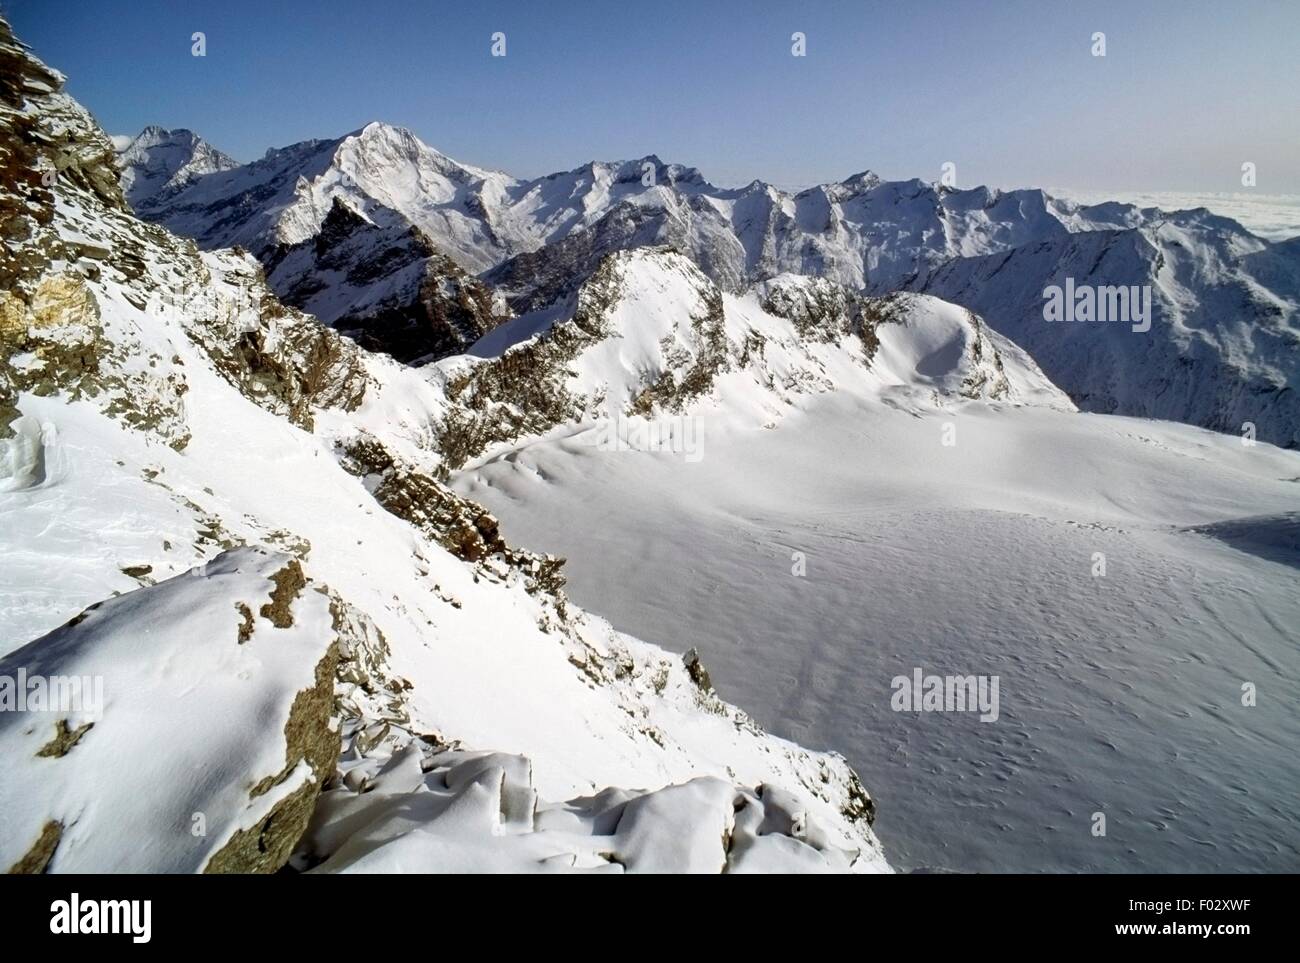 View of Allalin Glacier from Mittelallalin (3456 metres), Saas Fee, Canton of Valais, Switzerland. Stock Photo